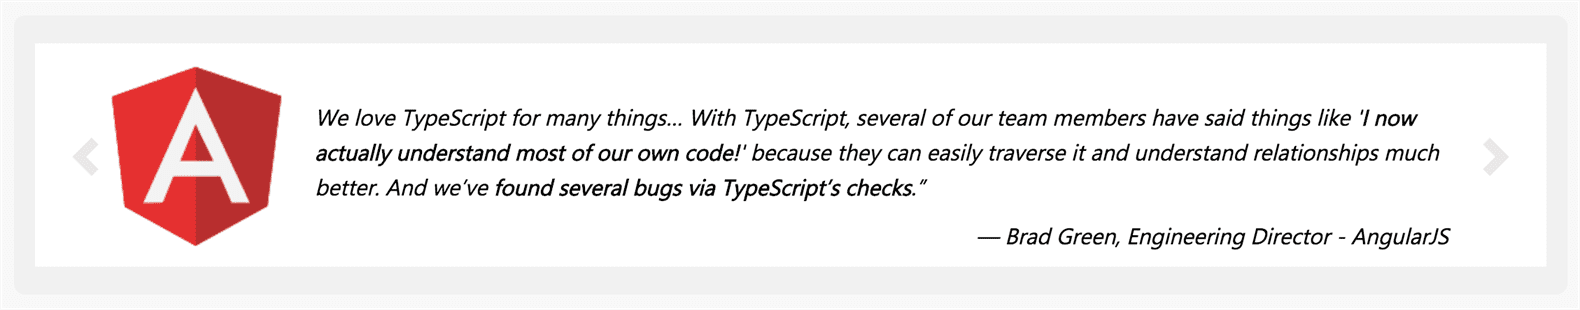 angular_diretor_about_typescript